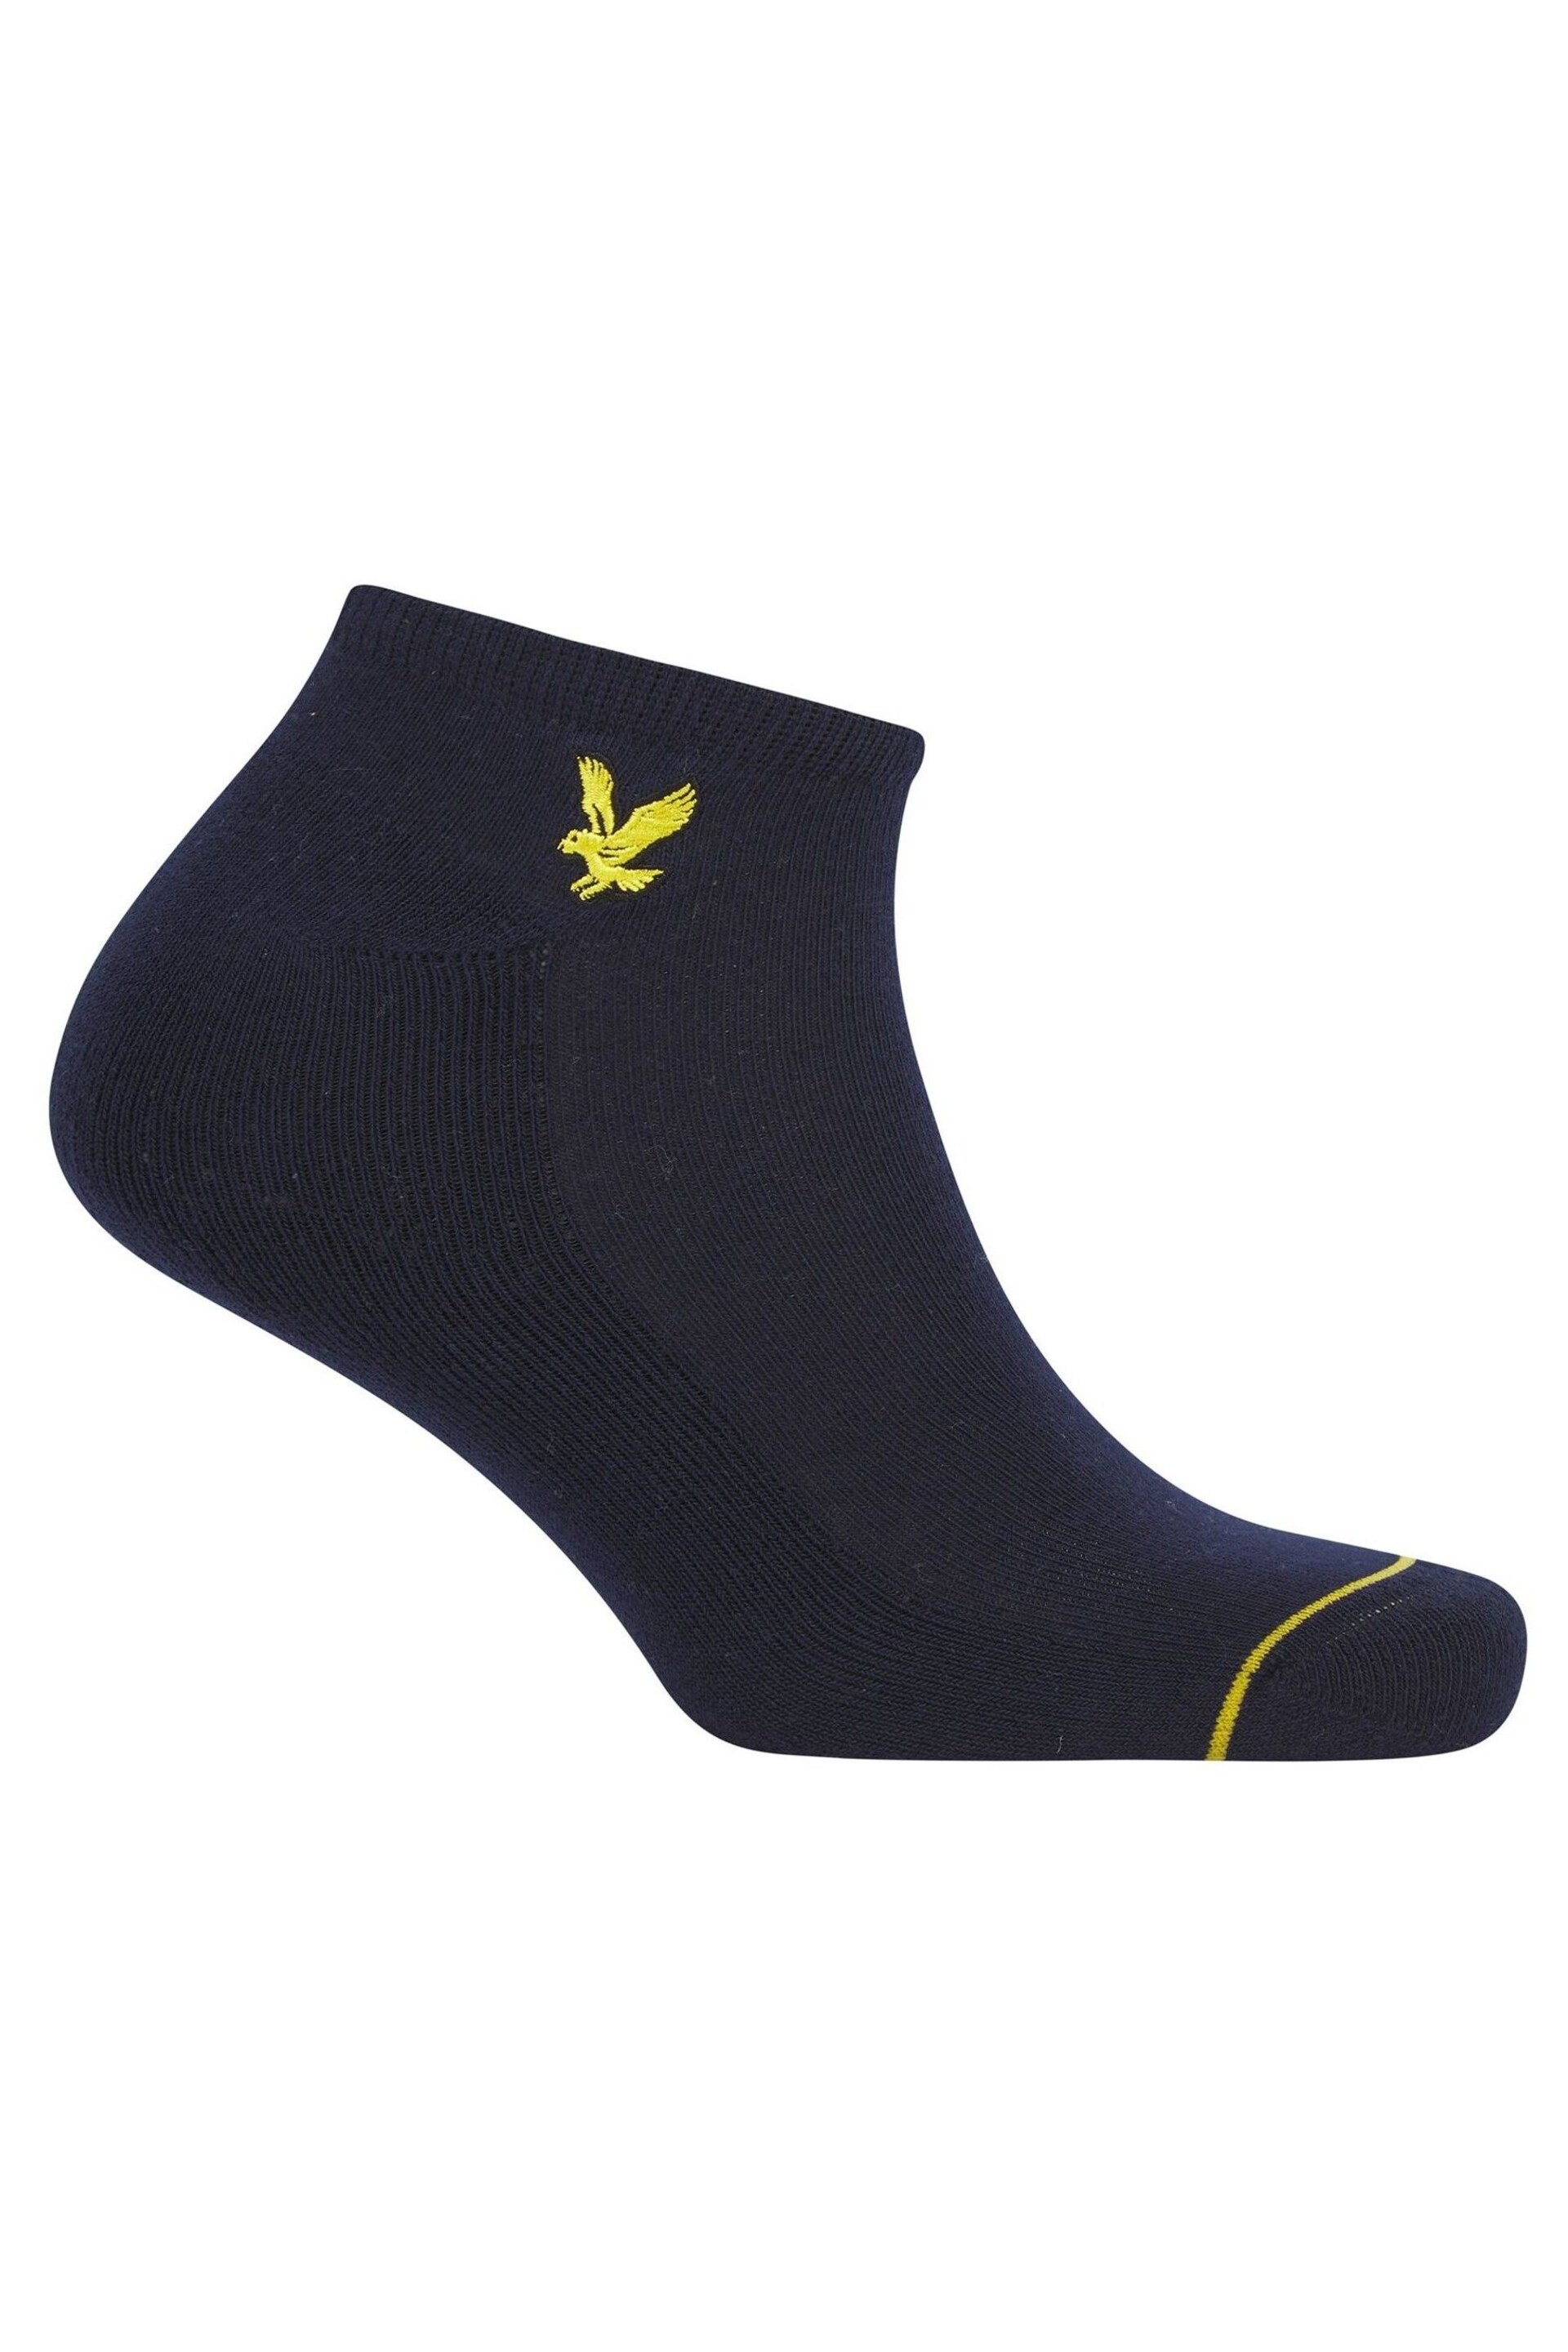 Lyle & Scott Multi Ruben Ankle Sports Socks 5 Pack - Image 5 of 6